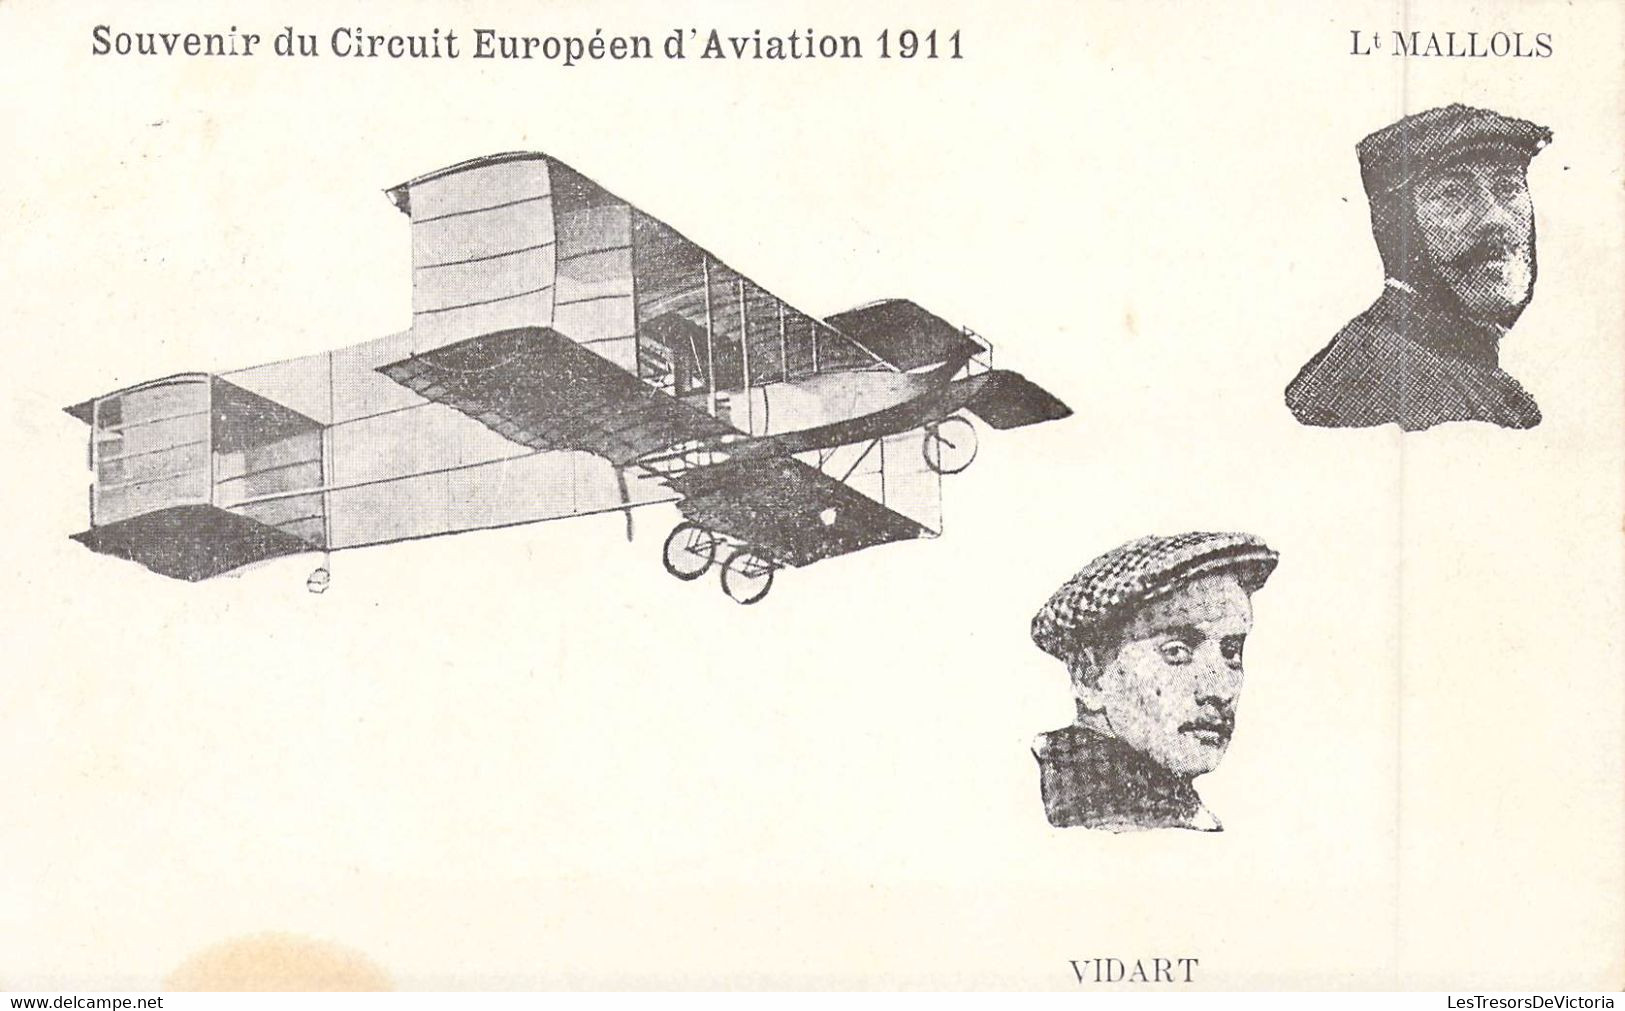 Aviateur - Aviation - Souvenirs Du Circuit D'aviation 1911 - Lt Mallols - Mr Vidart - Carte Postale Ancienne - Aviatori